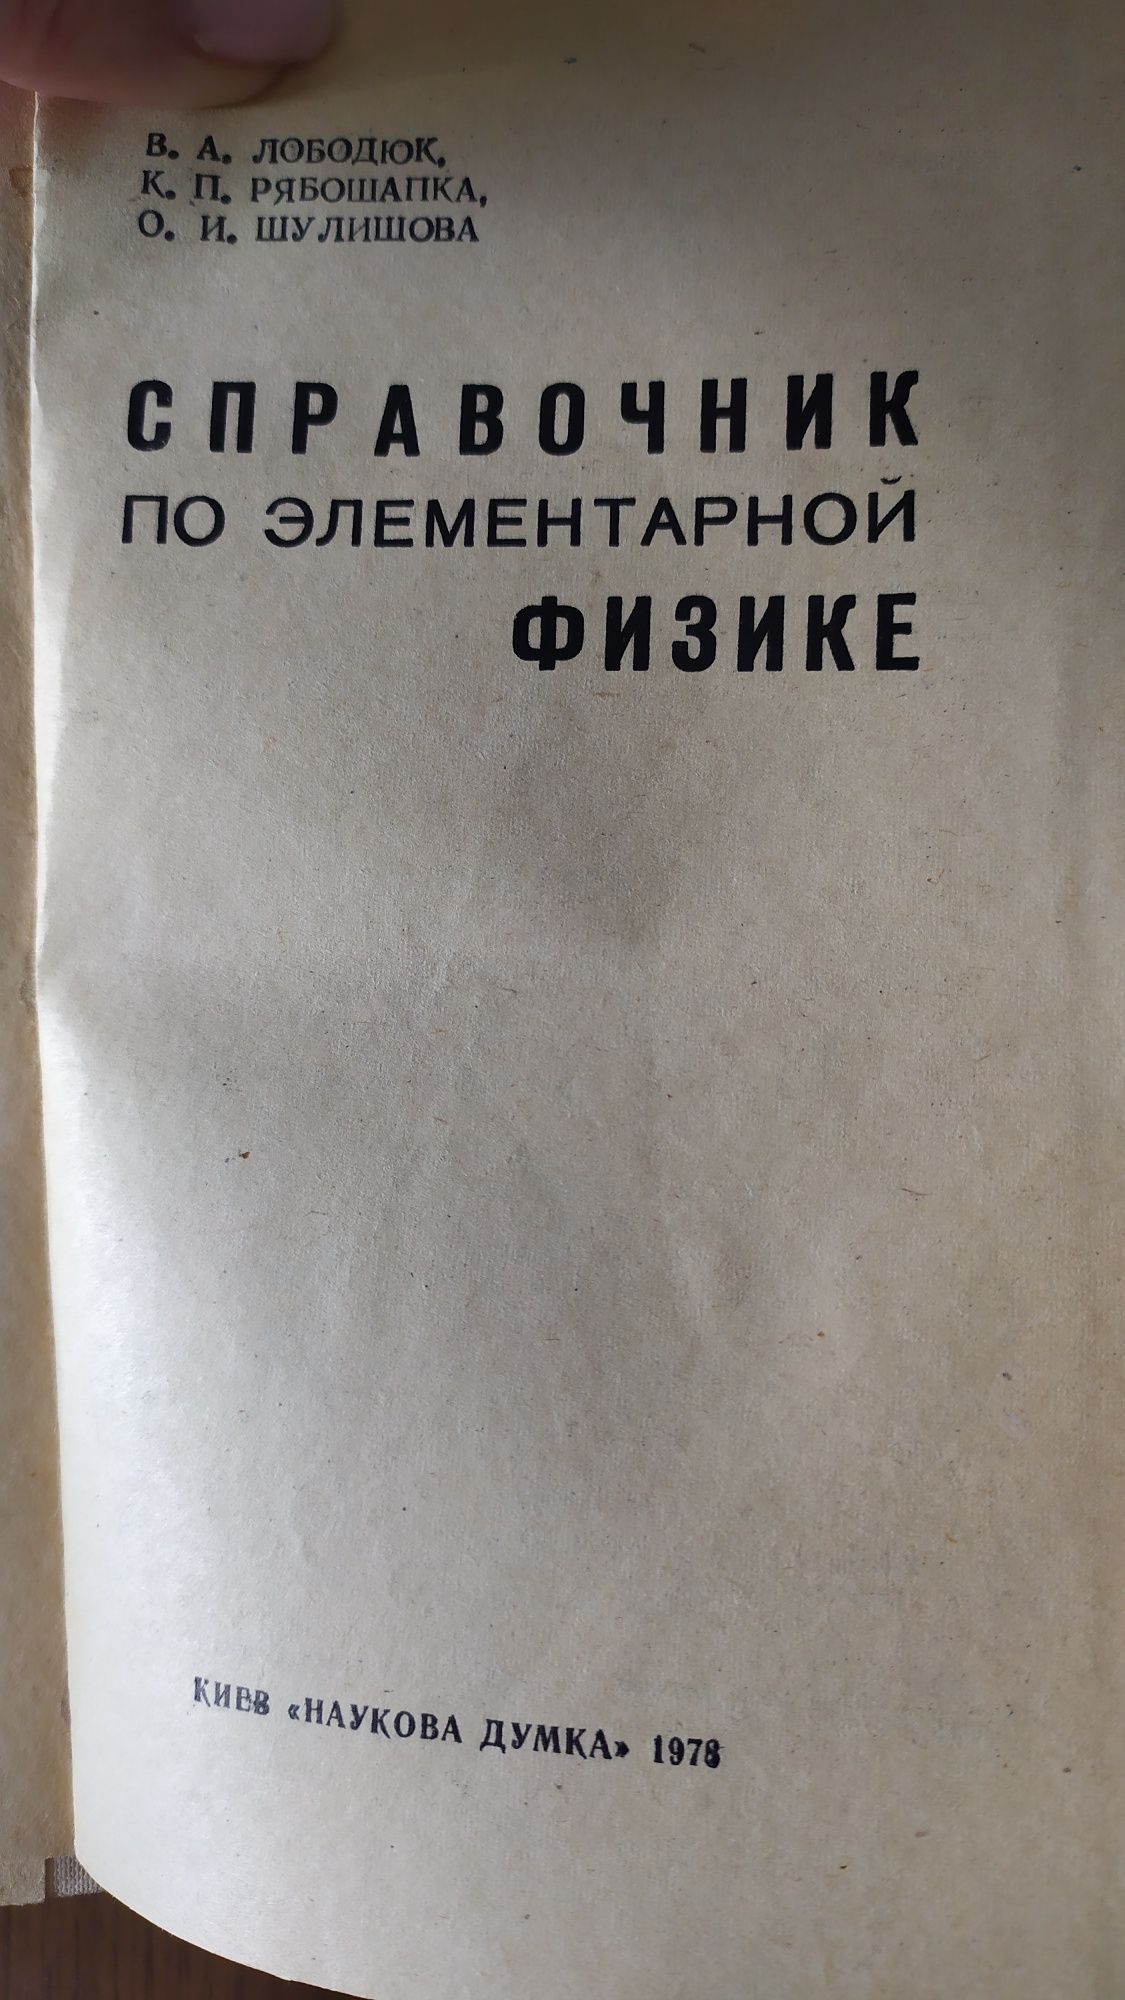 Справочник по элементарной физике. 1978 год.